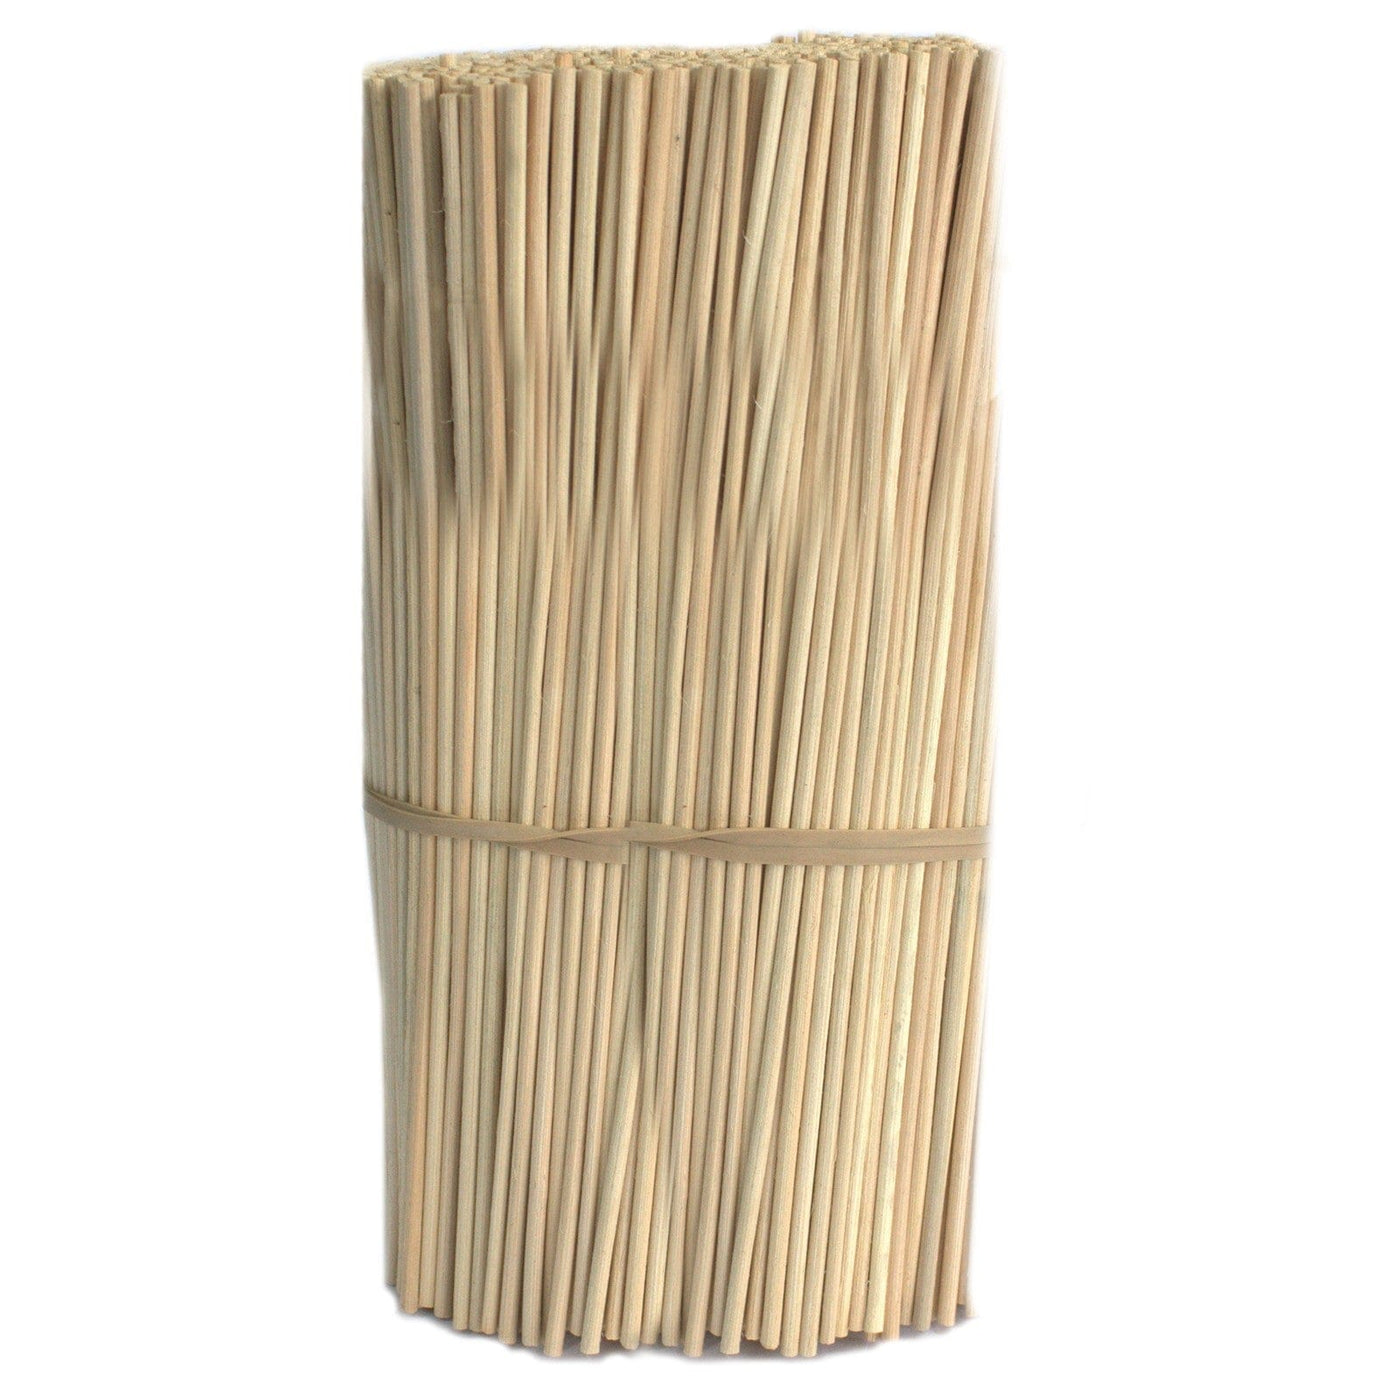 Natural Reed Diffuser Sticks - 500 Pack